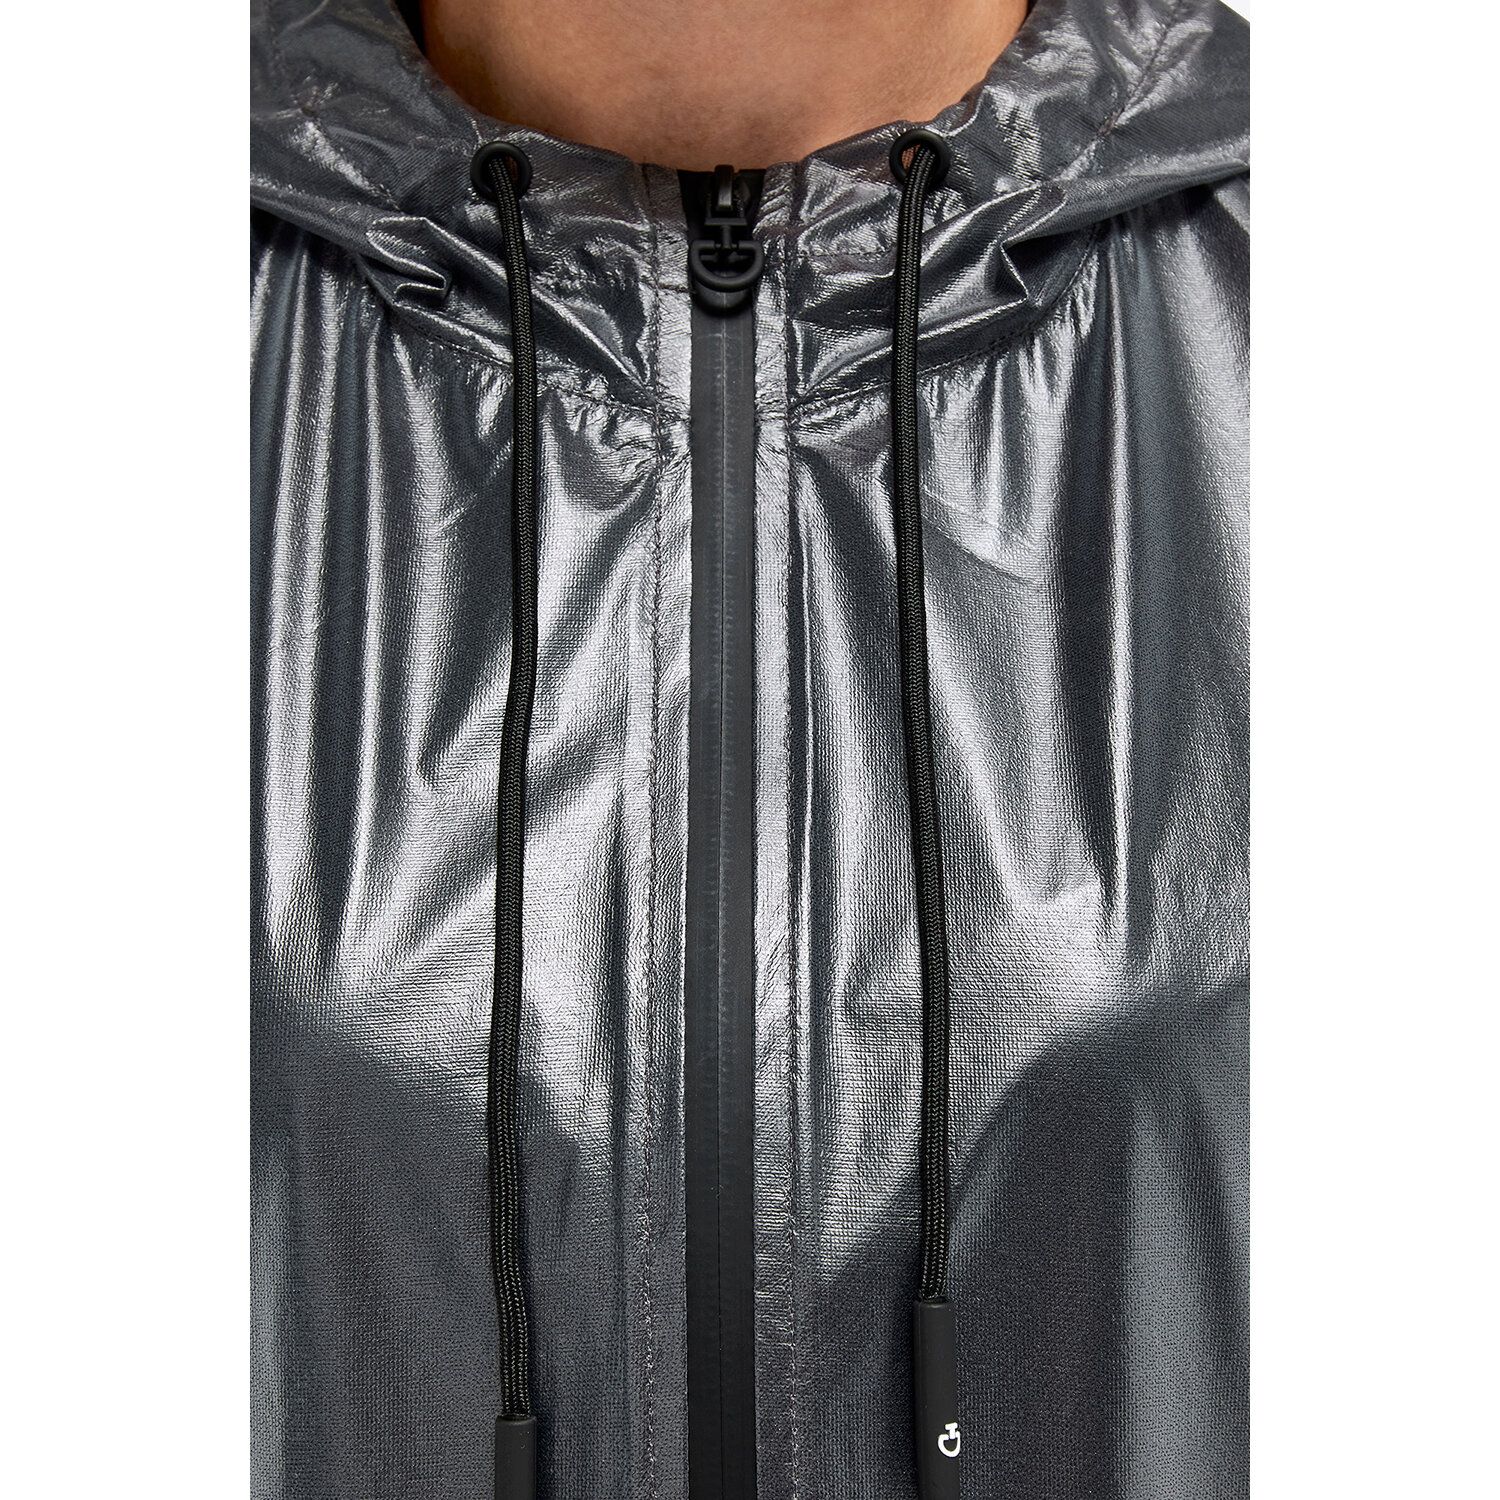 Cavalleria Toscana CT Academy unisex waterproof jacket Graphite Grey-6